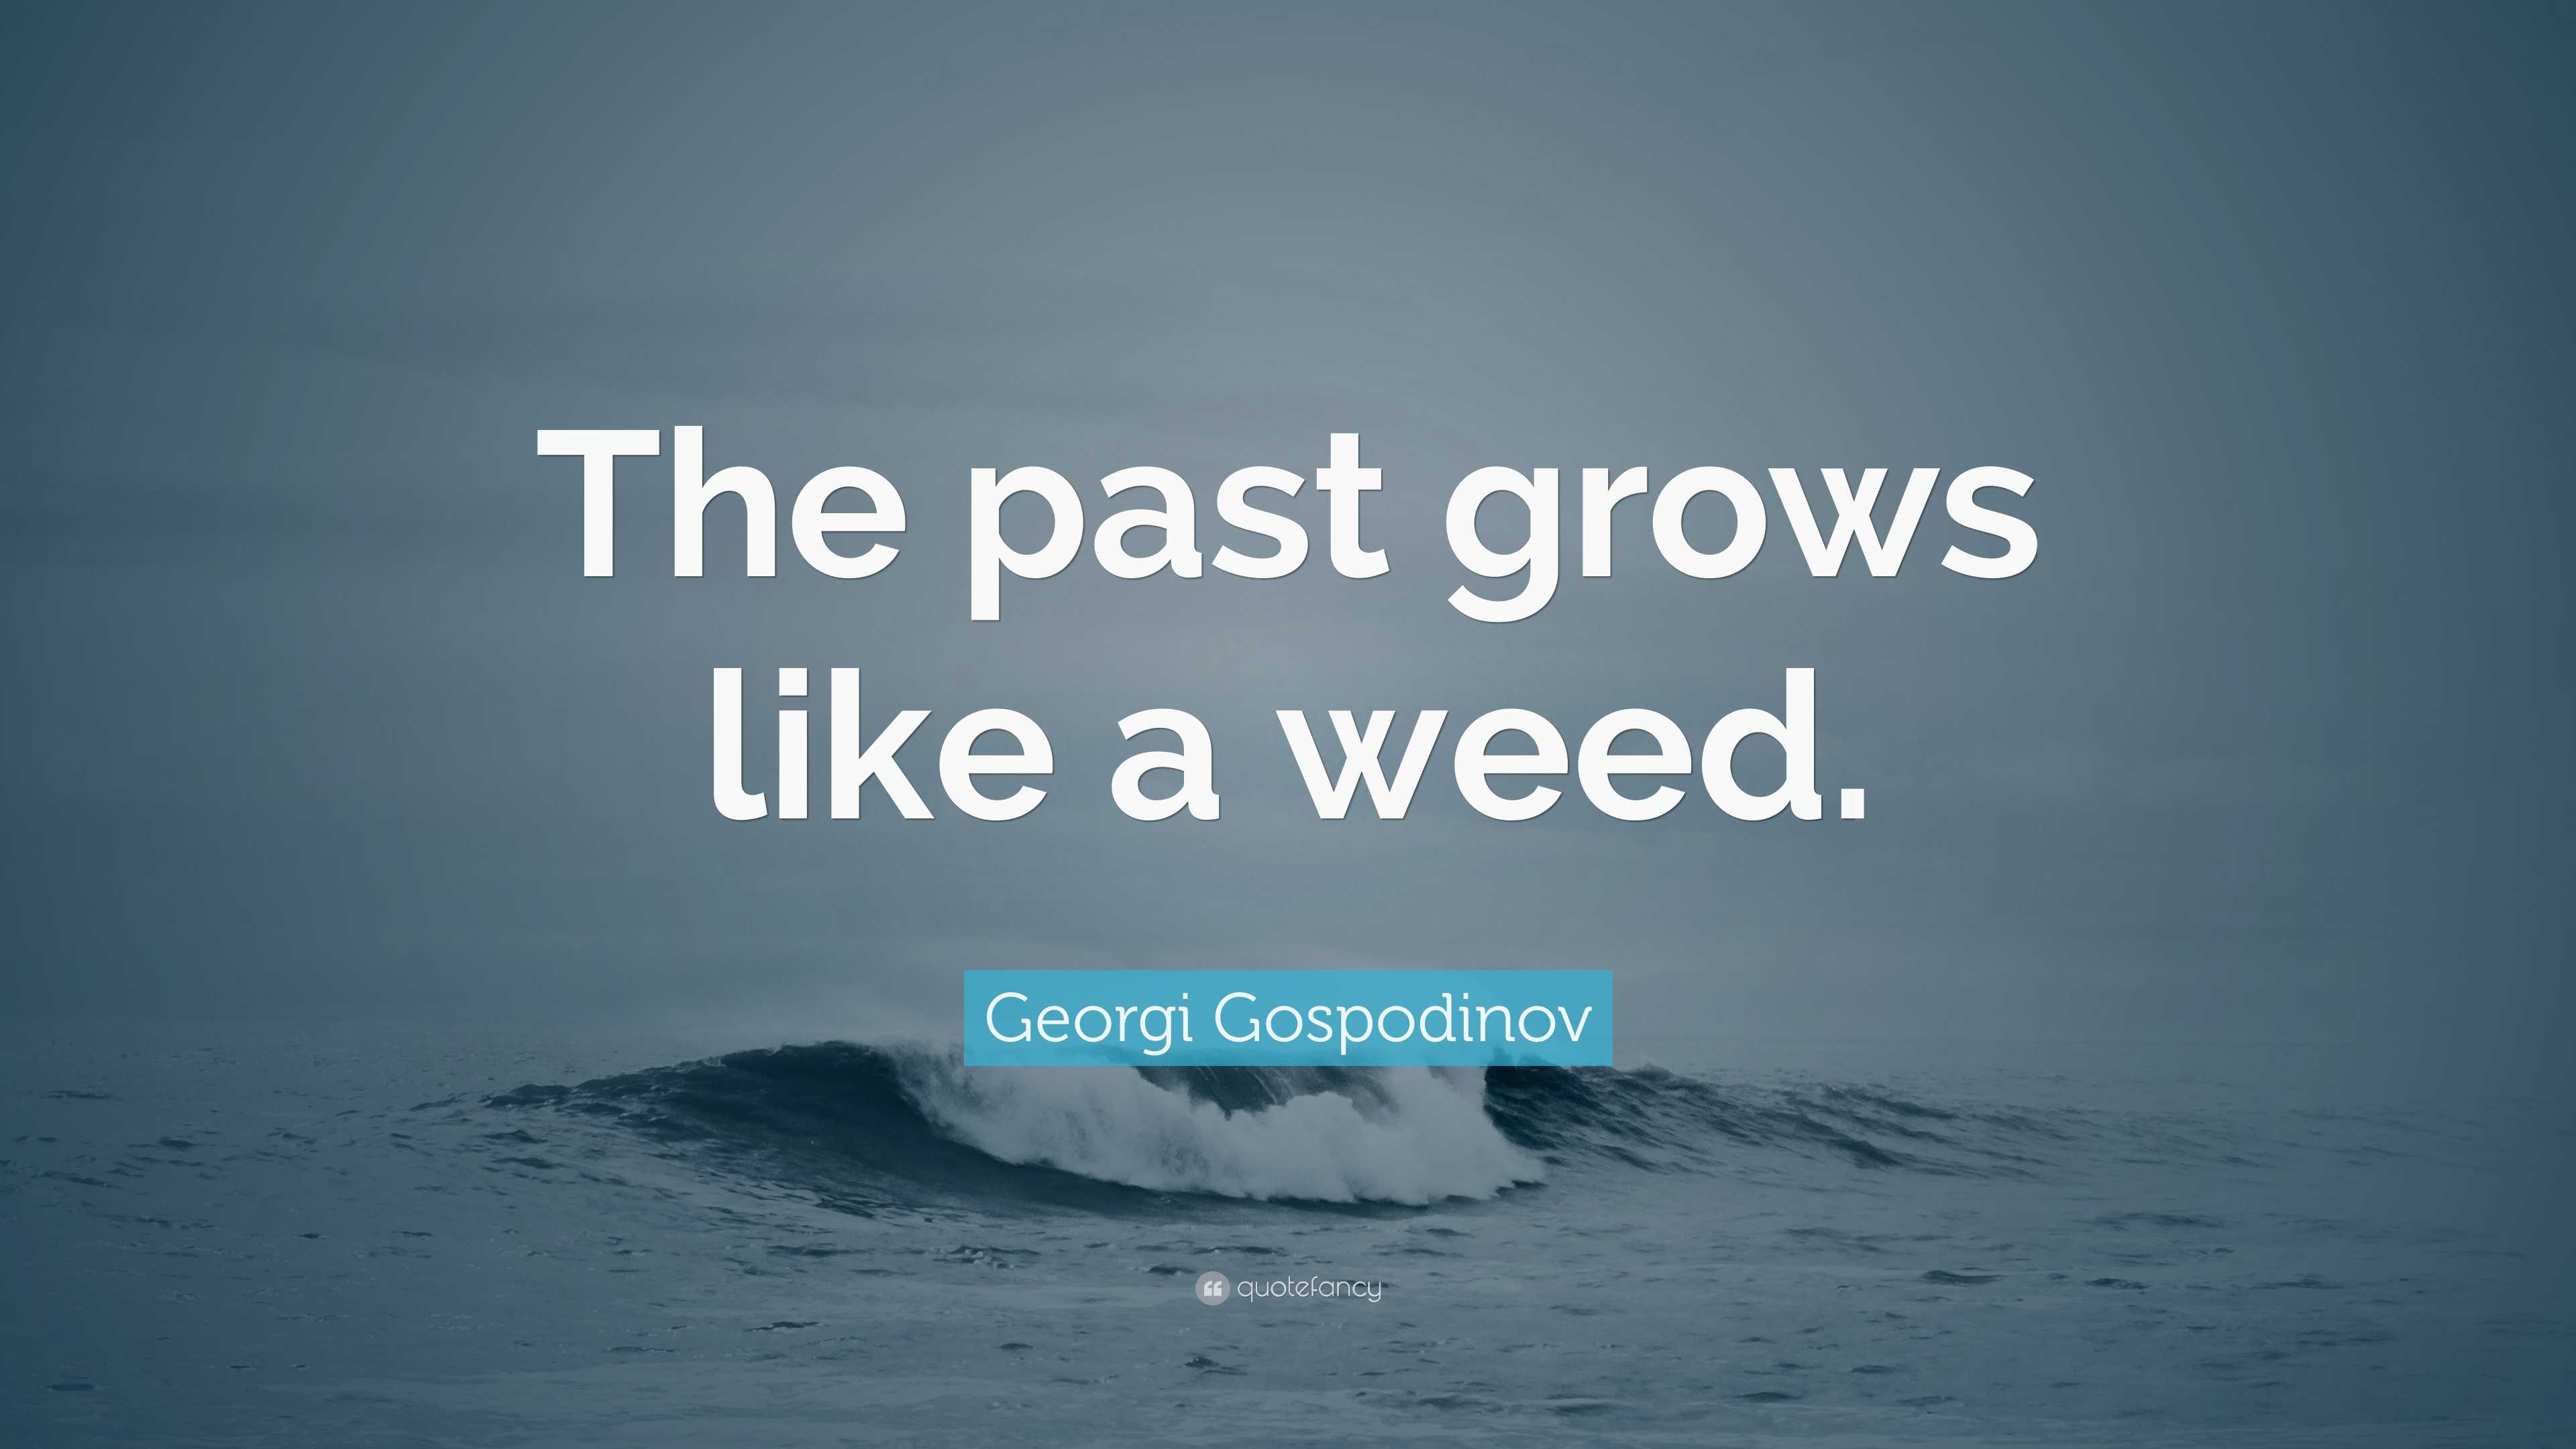 Georgi Gospodinov Quote: “The past grows like a weed.”